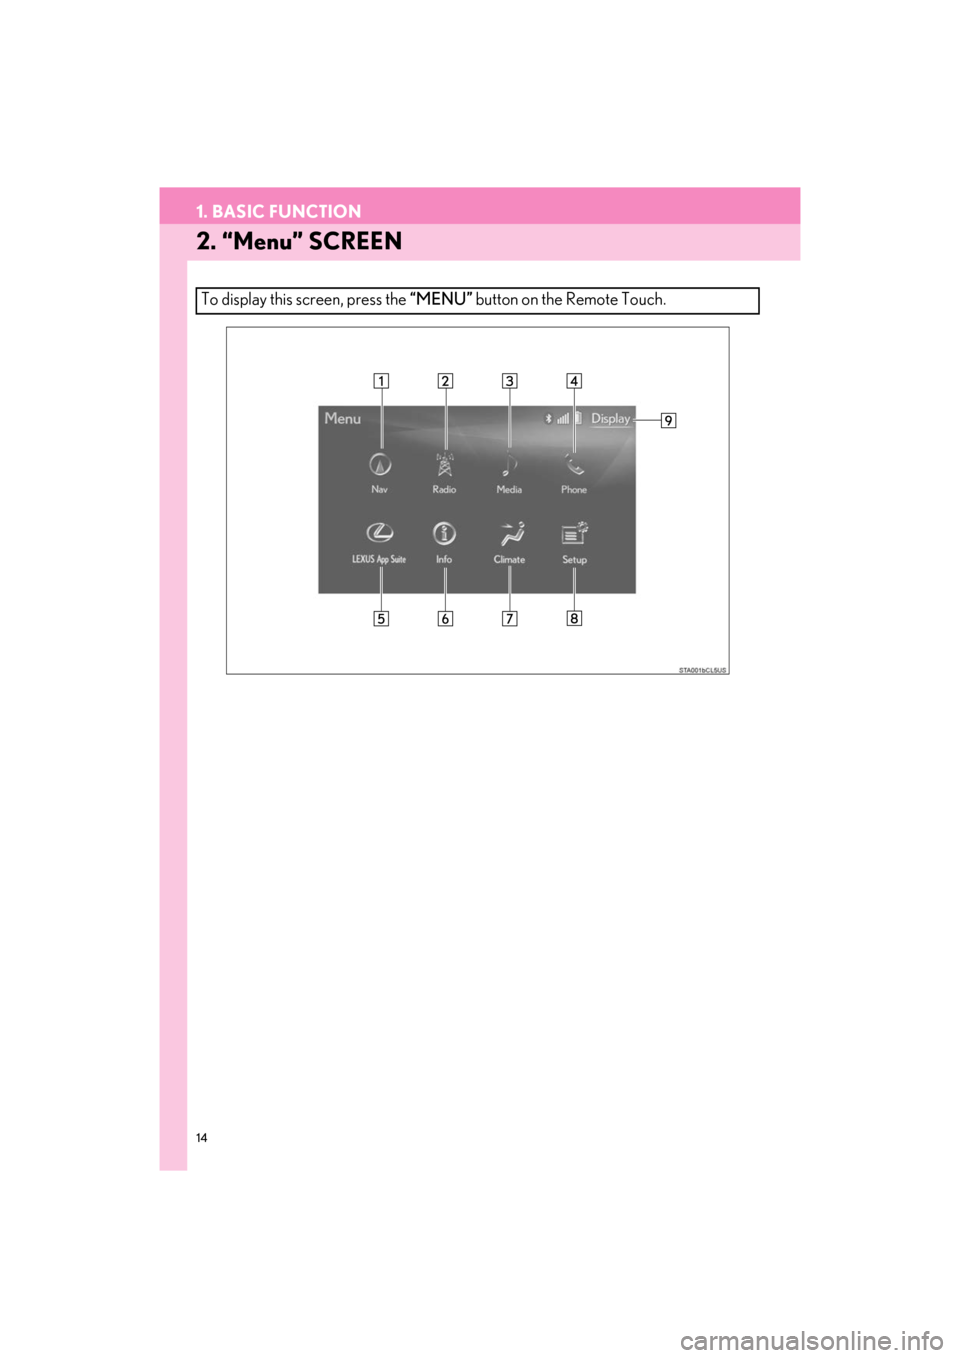 Lexus ES300h 2017  Navigation Manual 14
1. BASIC FUNCTION
ES350/300h_Navi_OM33C79U_(U)16.06.22     14:51
2. “Menu” SCREEN
To display this screen, press the “MENU” button on the Remote Touch.
ES350_300h_Navi_OM33C79U_(U).book  Pag